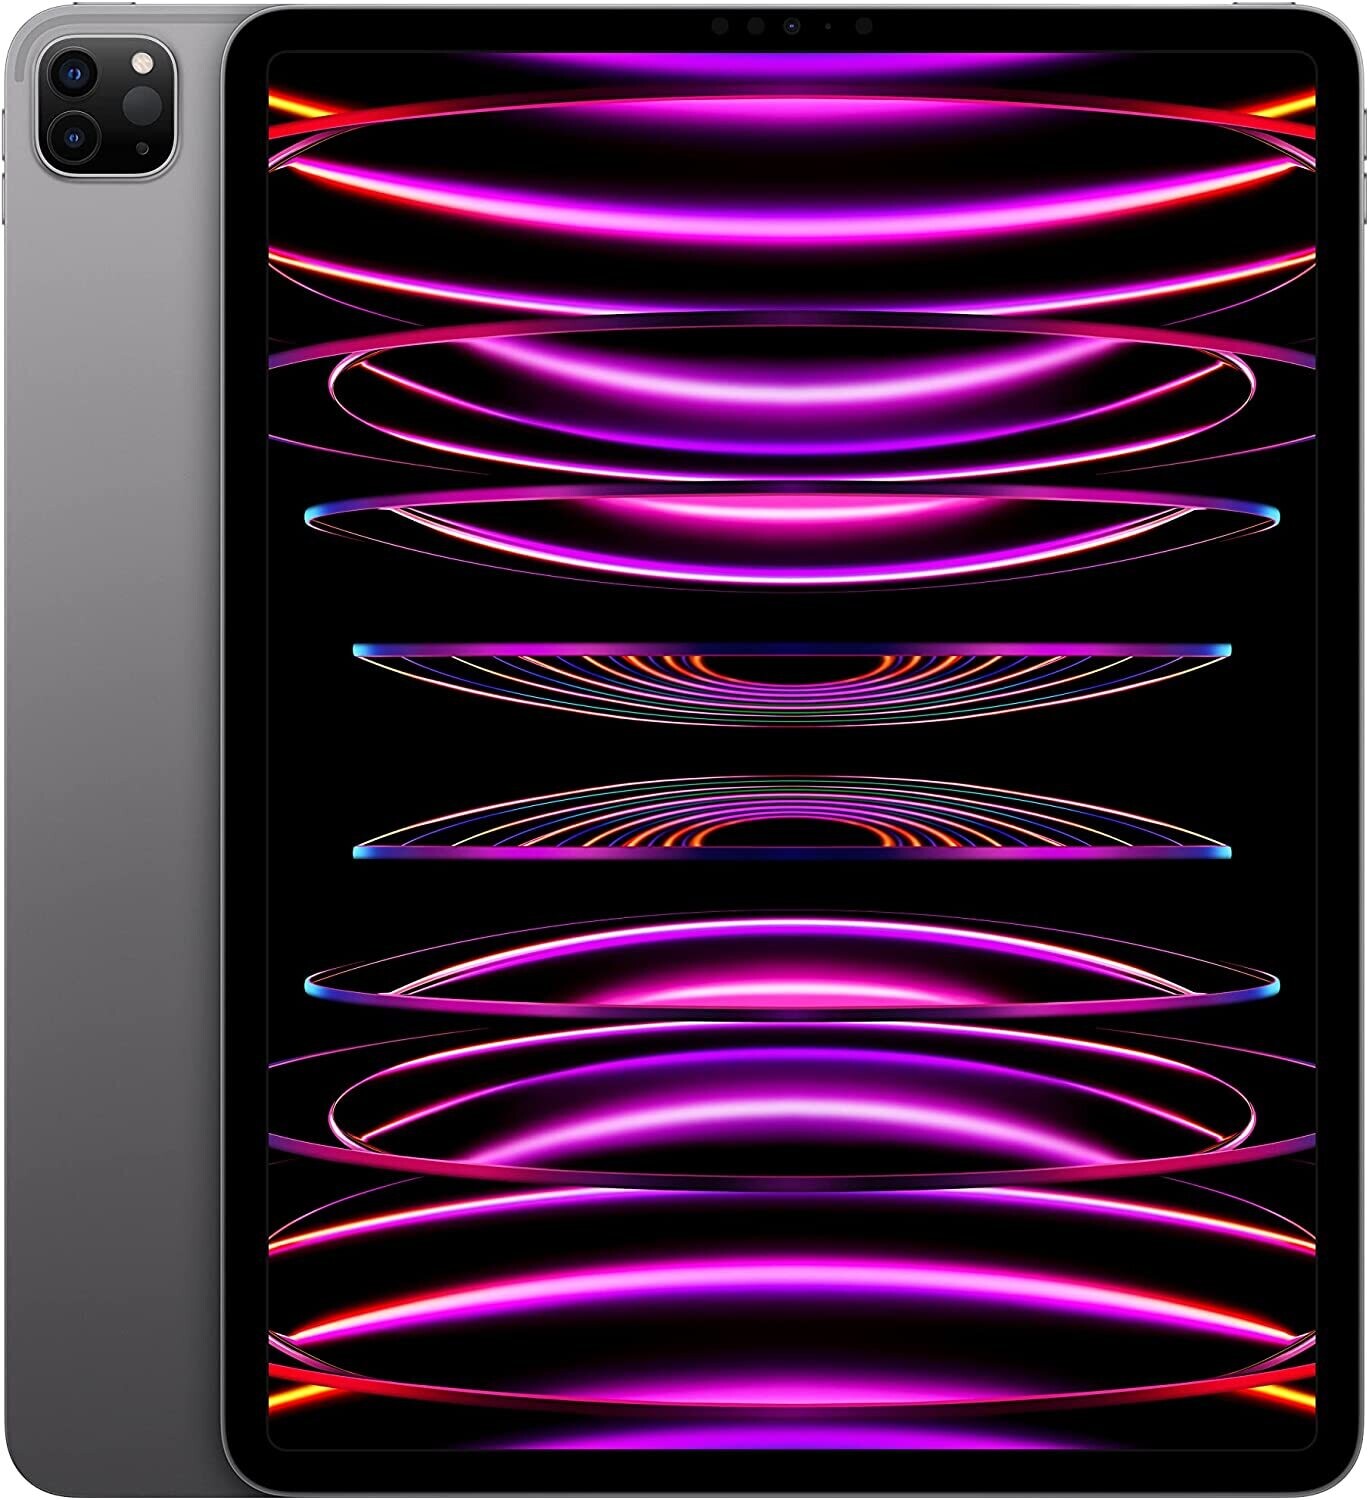 2022 Apple 12.9-inch iPad Pro (Wi-Fi, 512GB) - Space Gray (6th Generation)